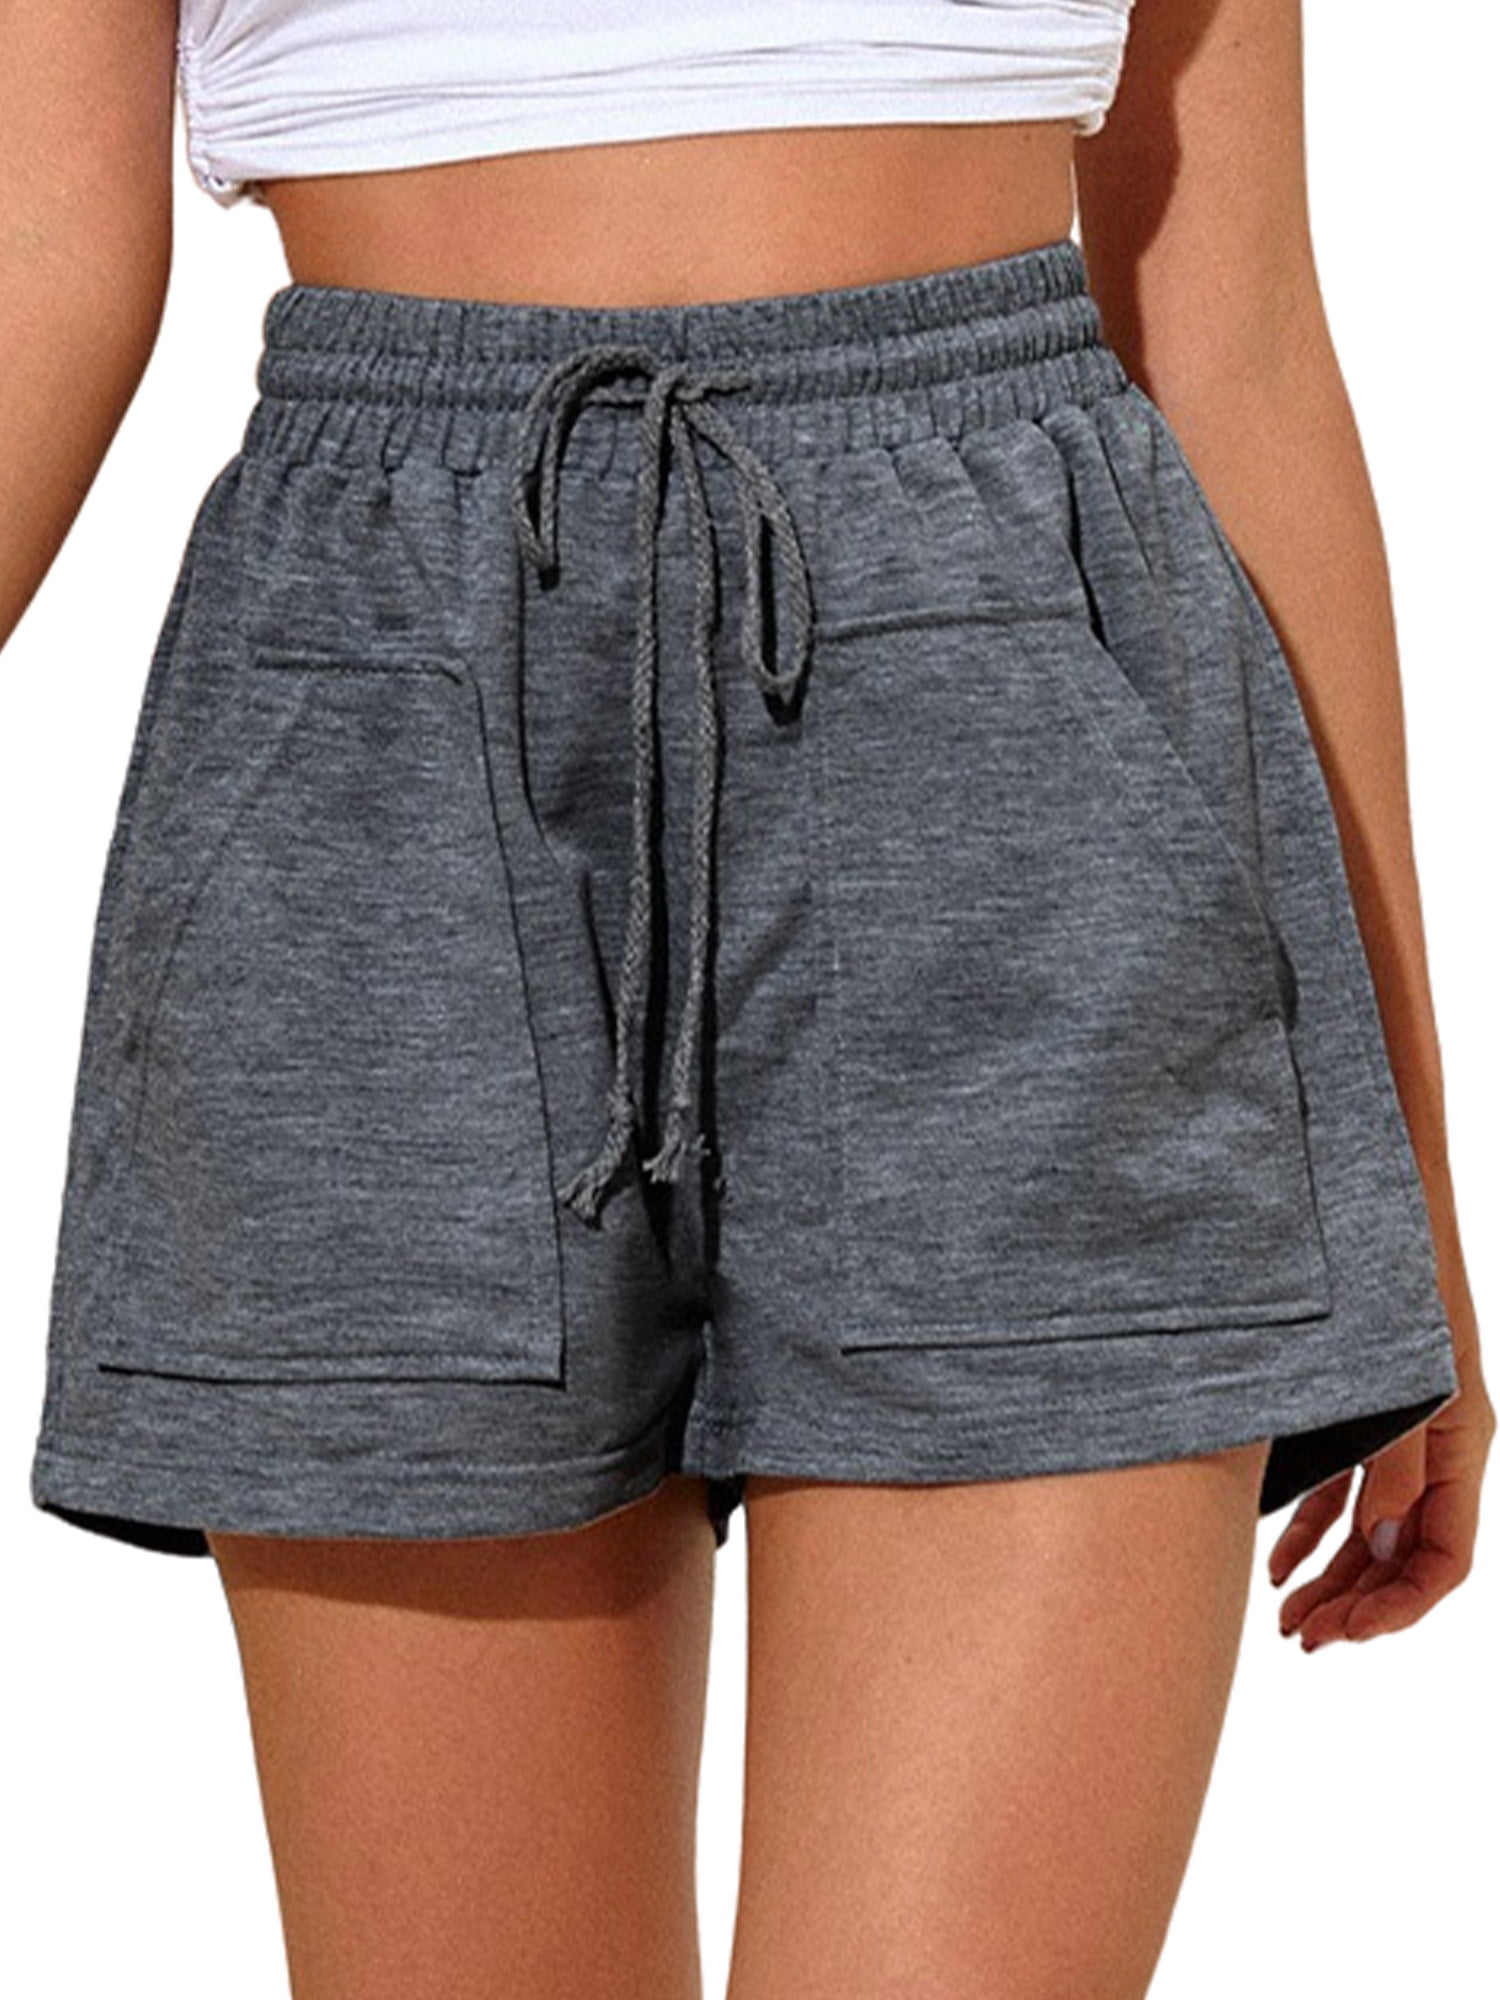 Aibrou Womens Pyjama Bottoms Short Pants Ladies Summer Shorts Cotton Lounge Casual Pajama with Drawstring/Pockects for Sleep Gym Running